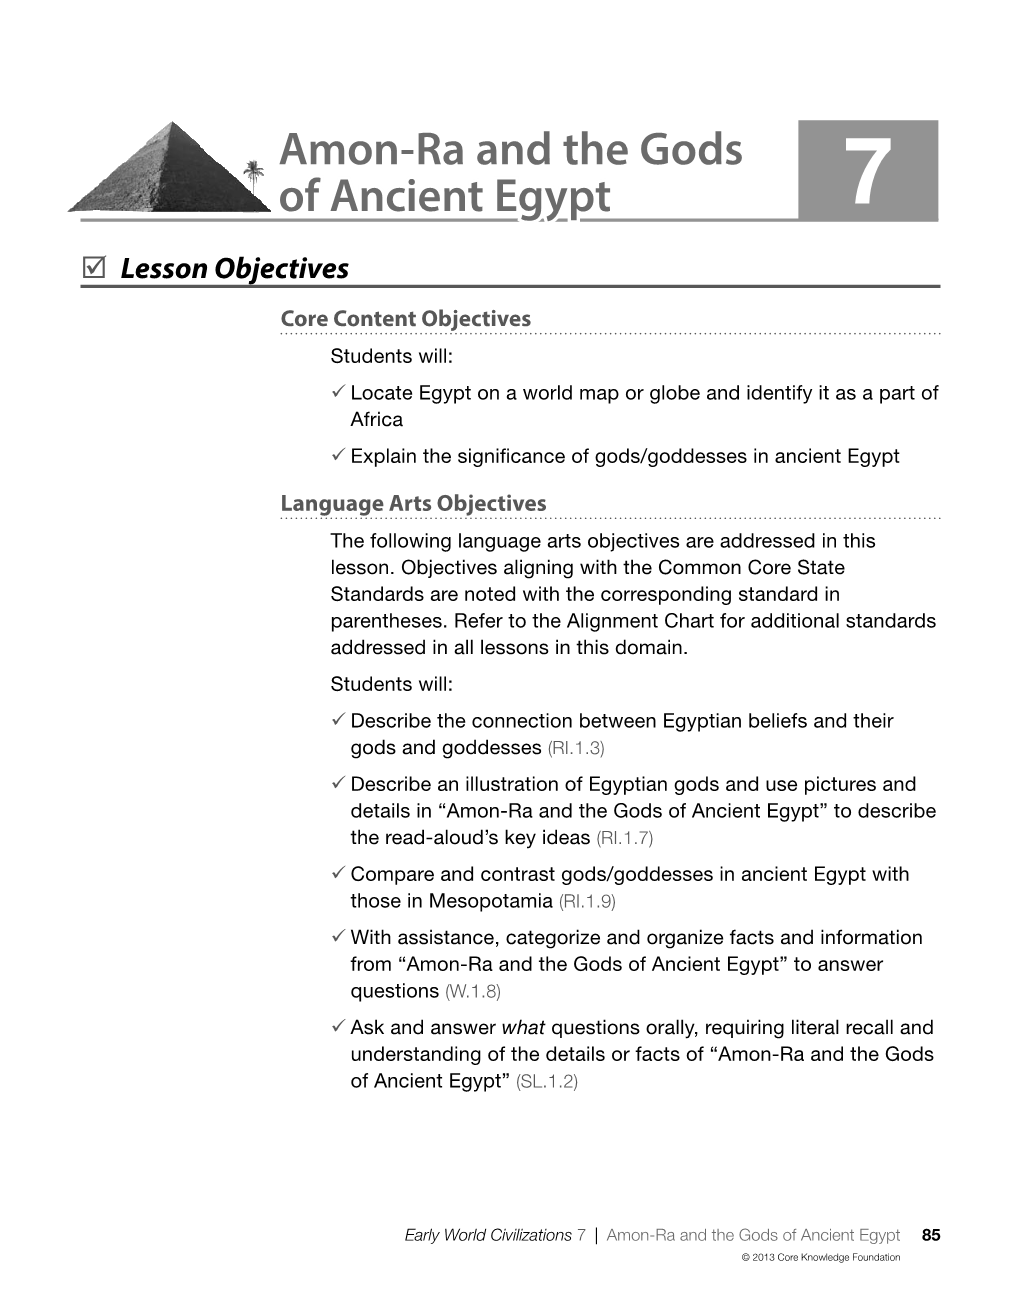 Amon-Ra and the Gods of Ancient Egypt